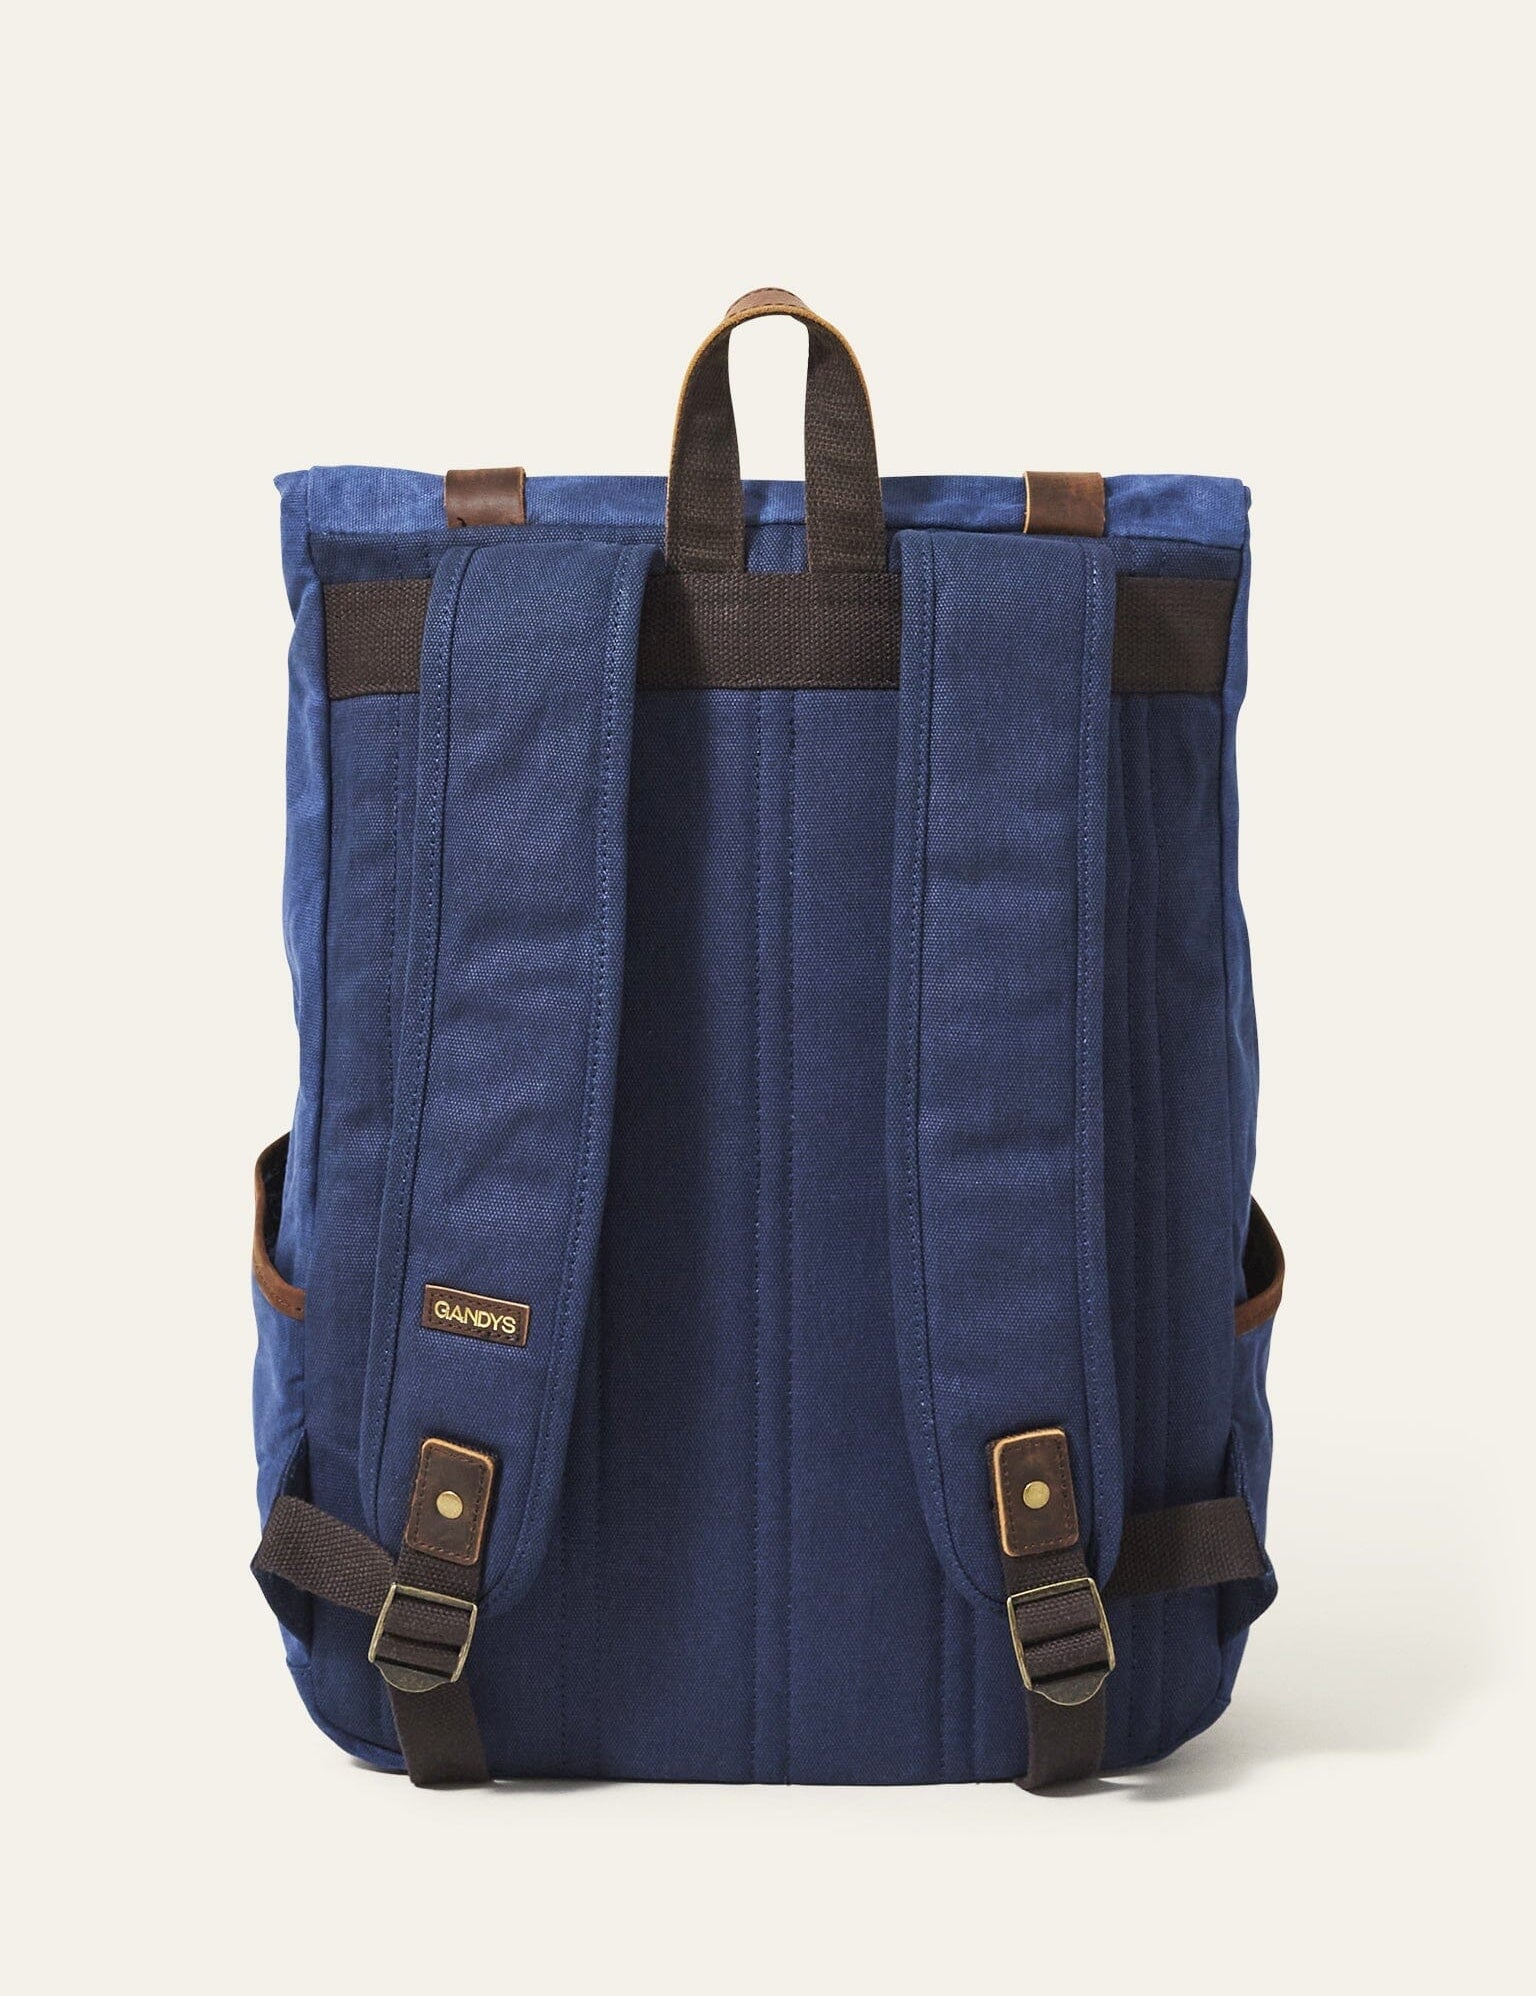 navy-waxed-cotton-bali-backpack-571890.jpg